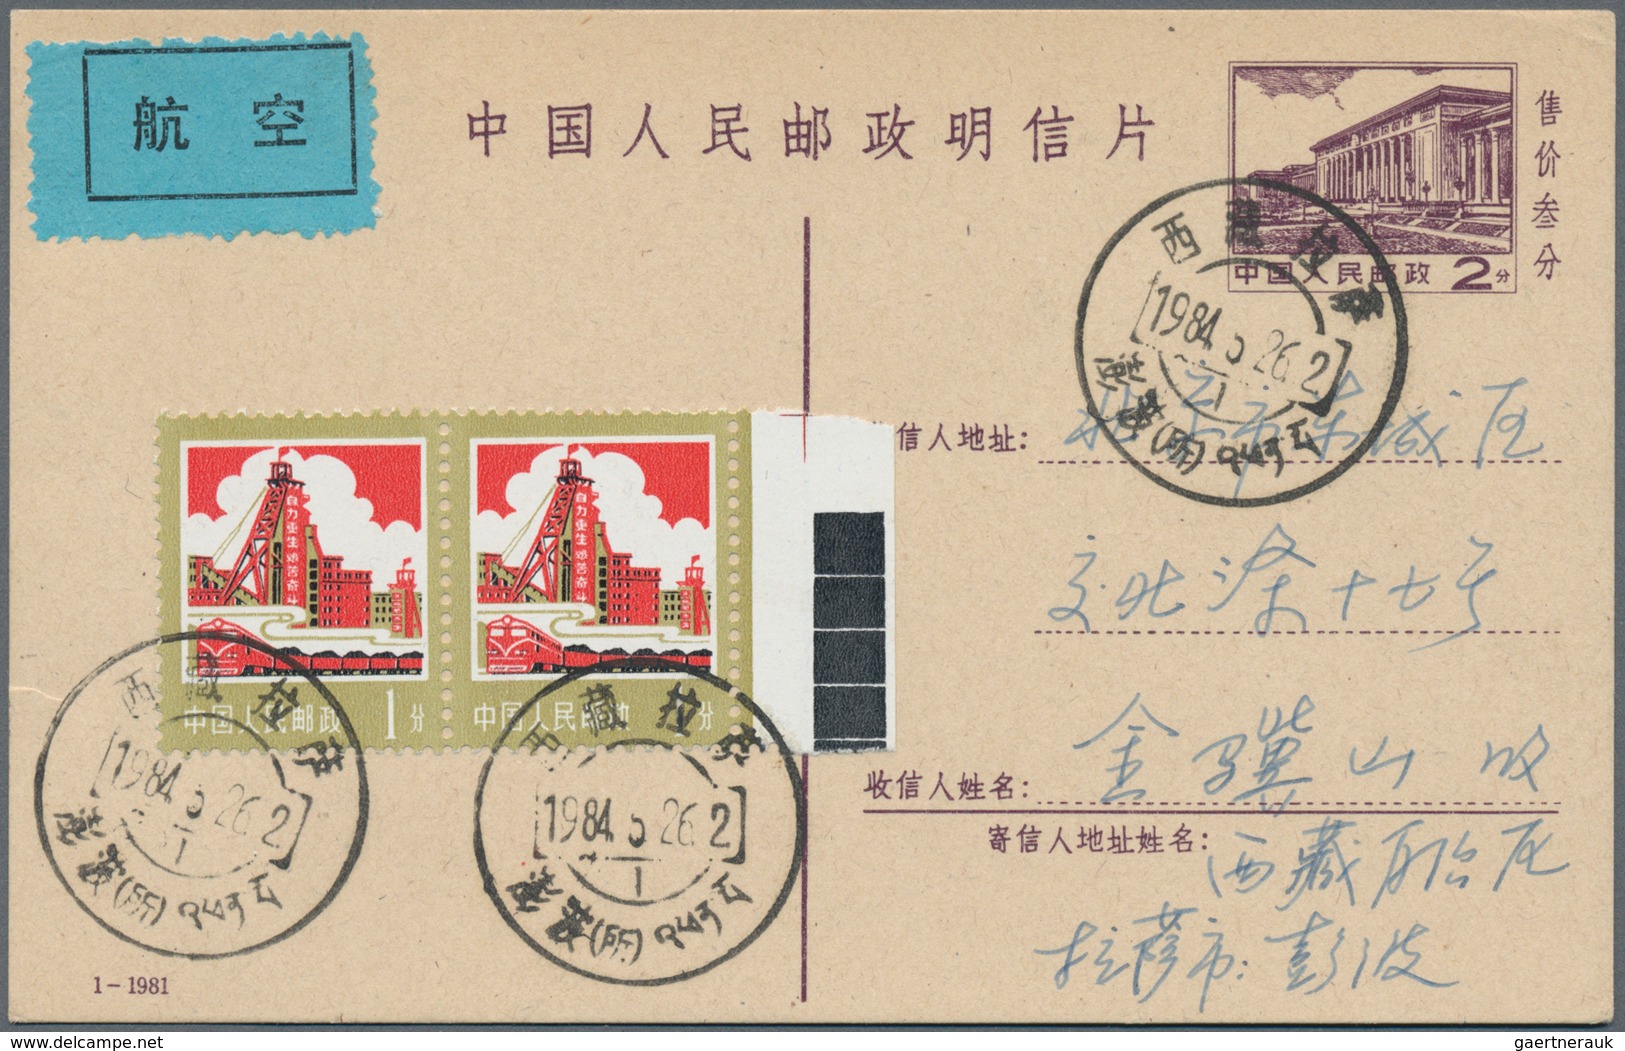 China - Volksrepublik - Ganzsachen: 1981, Used In Tibet, Cards 2 F. Brown (1-1981) Uprated By Air Ma - Ansichtskarten